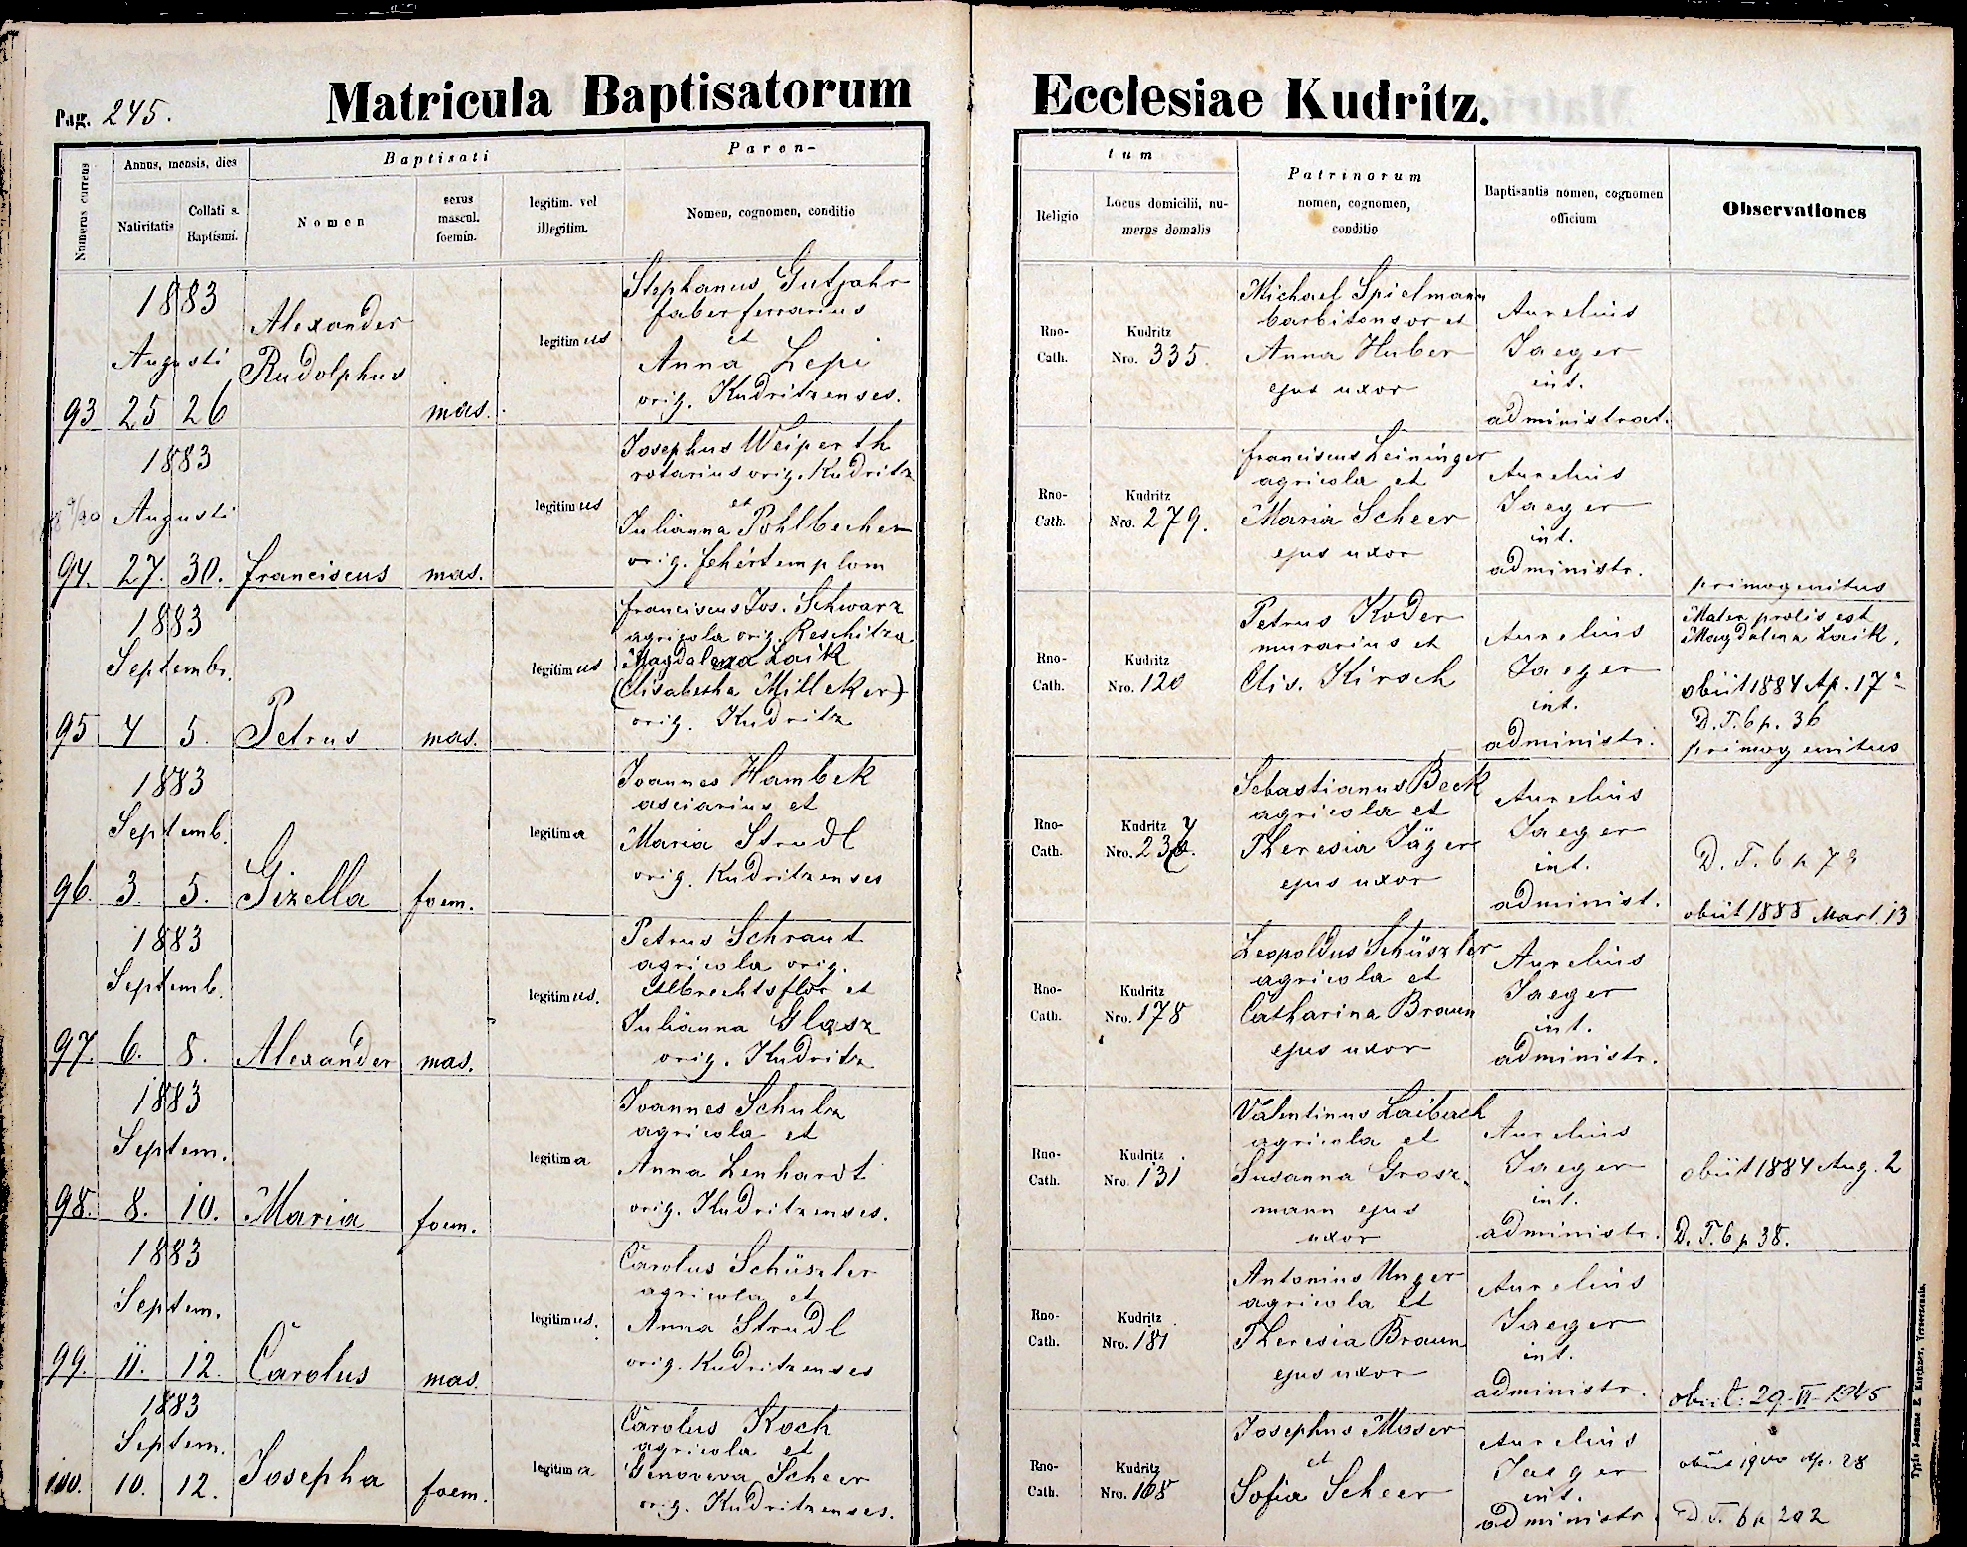 images/church_records/BIRTHS/1880-1883B/1883/245